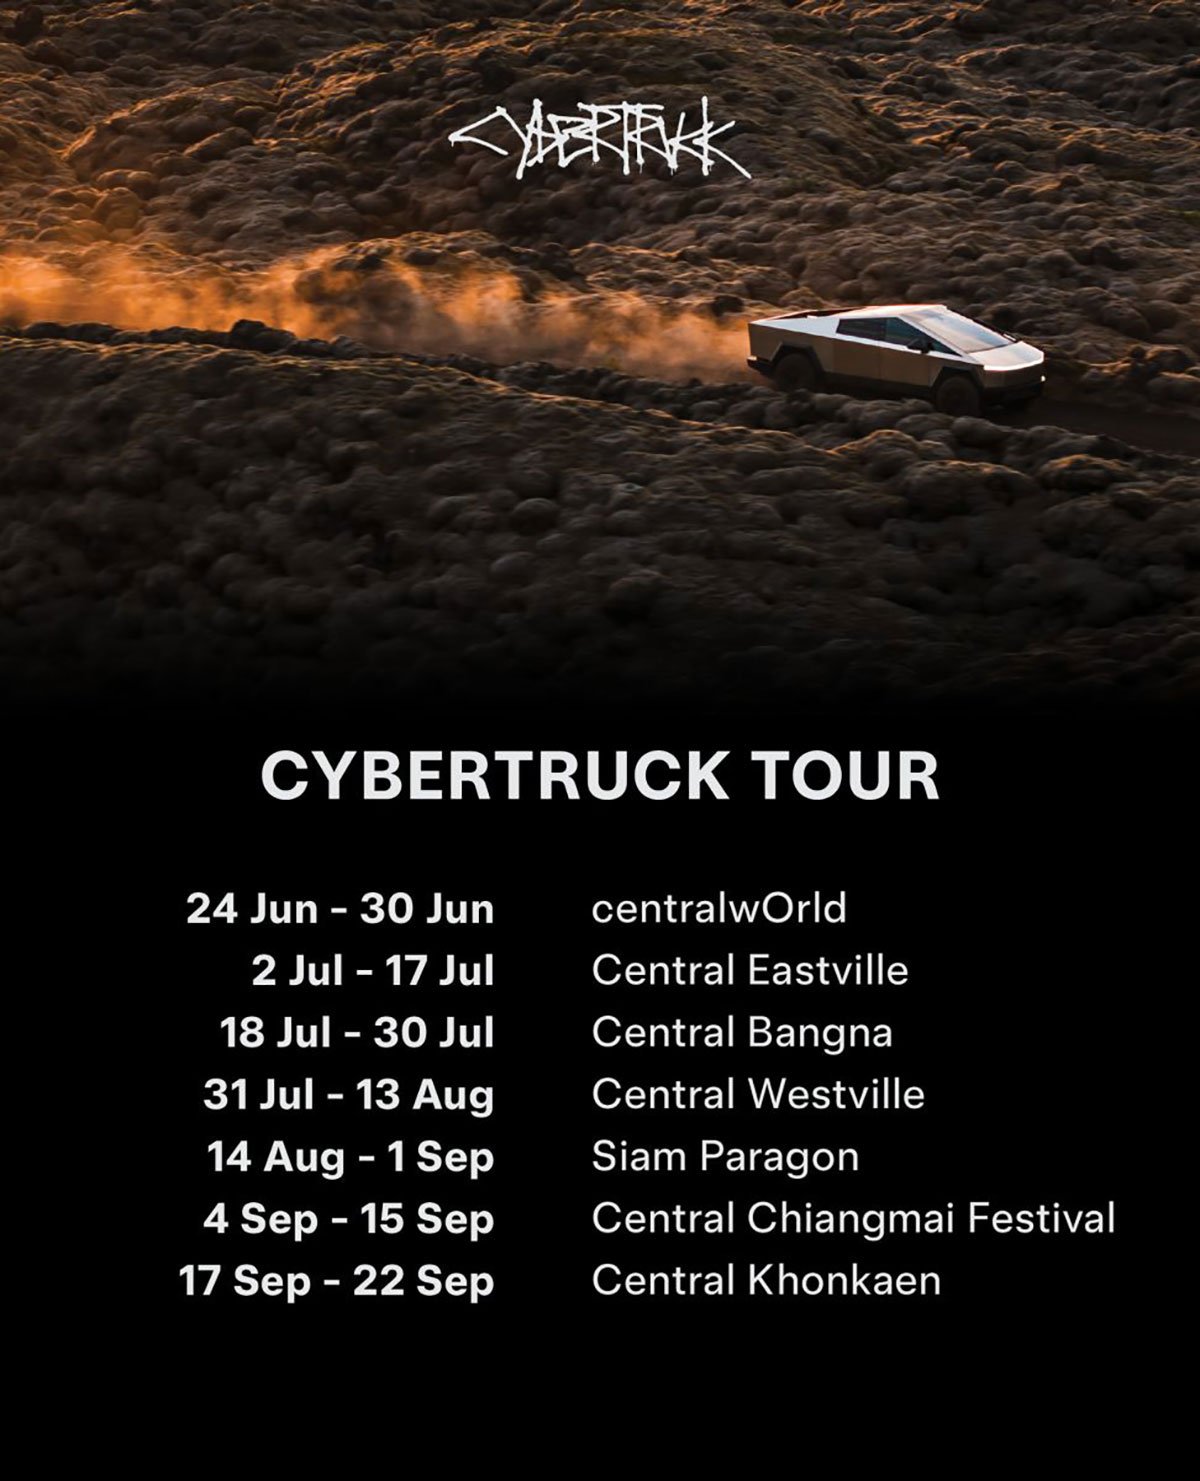 Cybertruck Tour Location